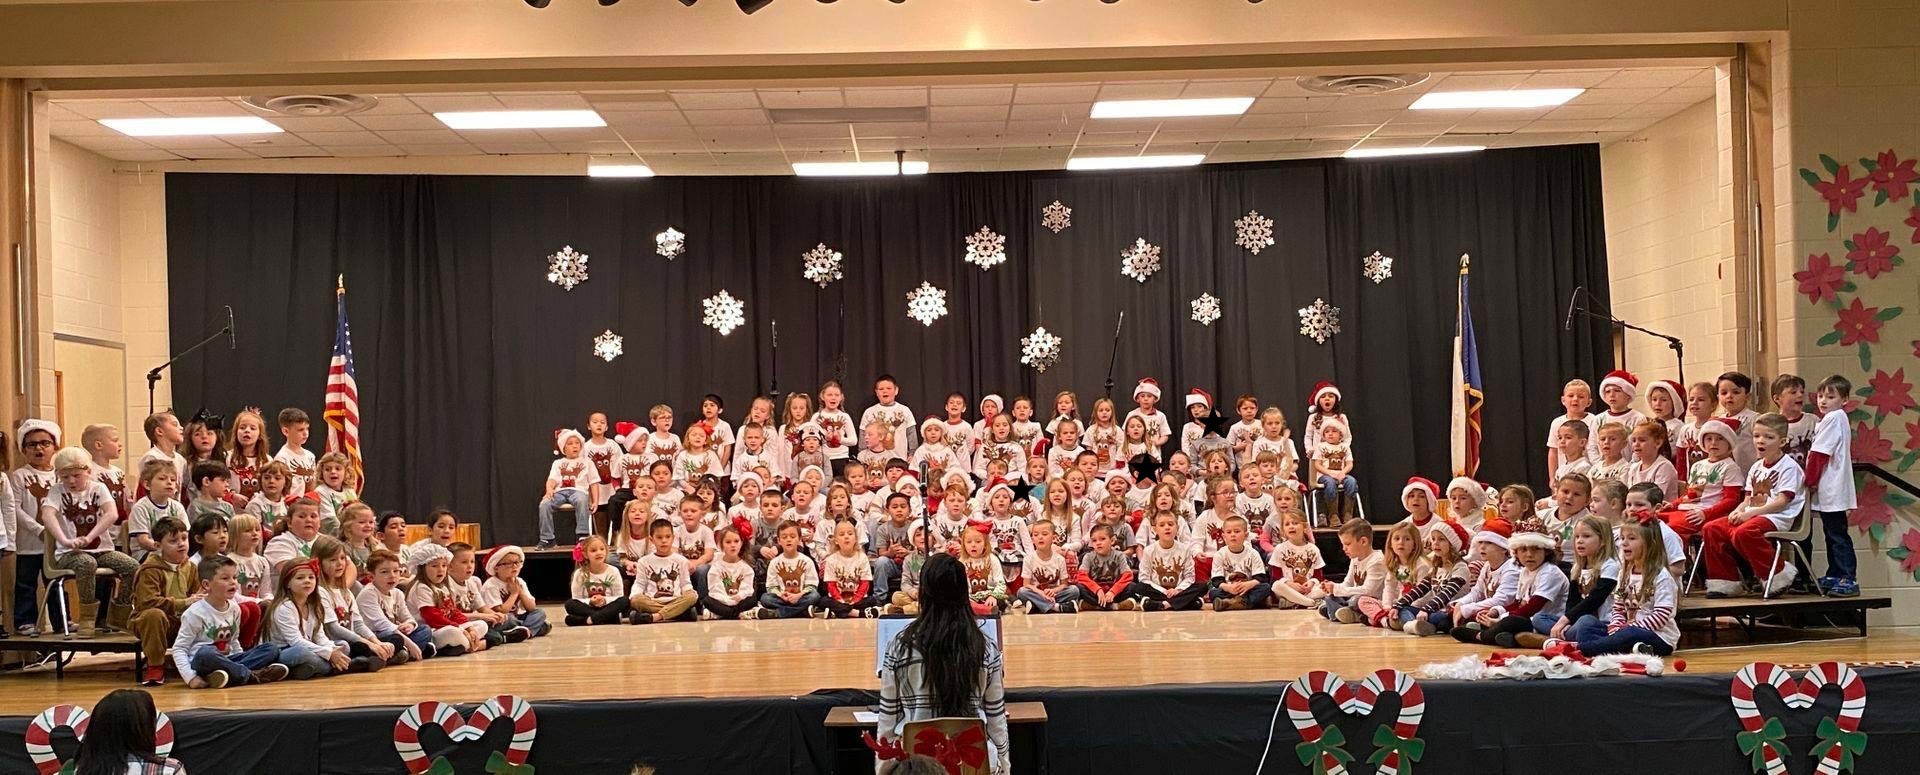 christmas event at sunblaze elementary school december 12